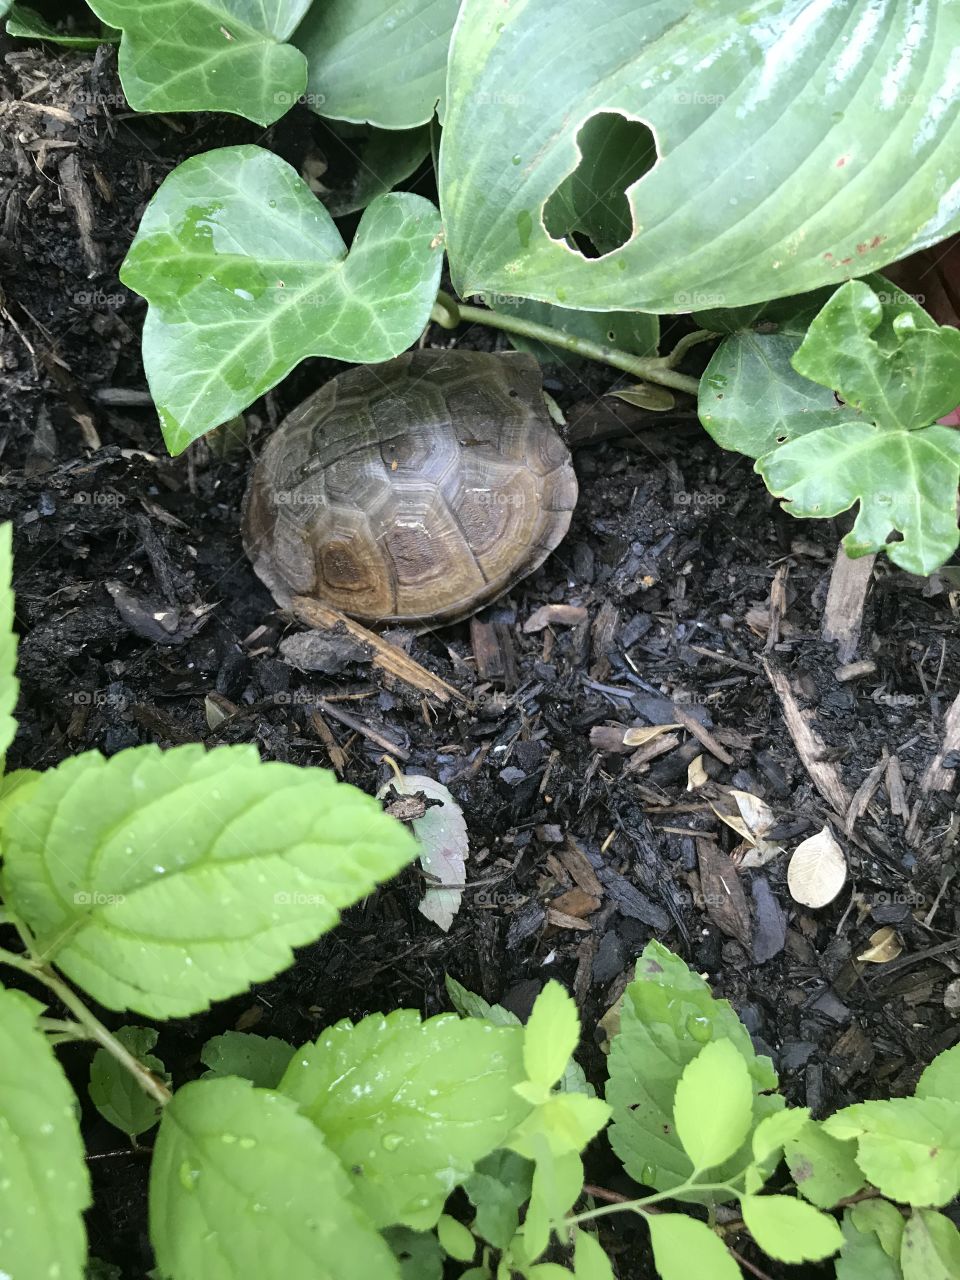 Turtle in the garden